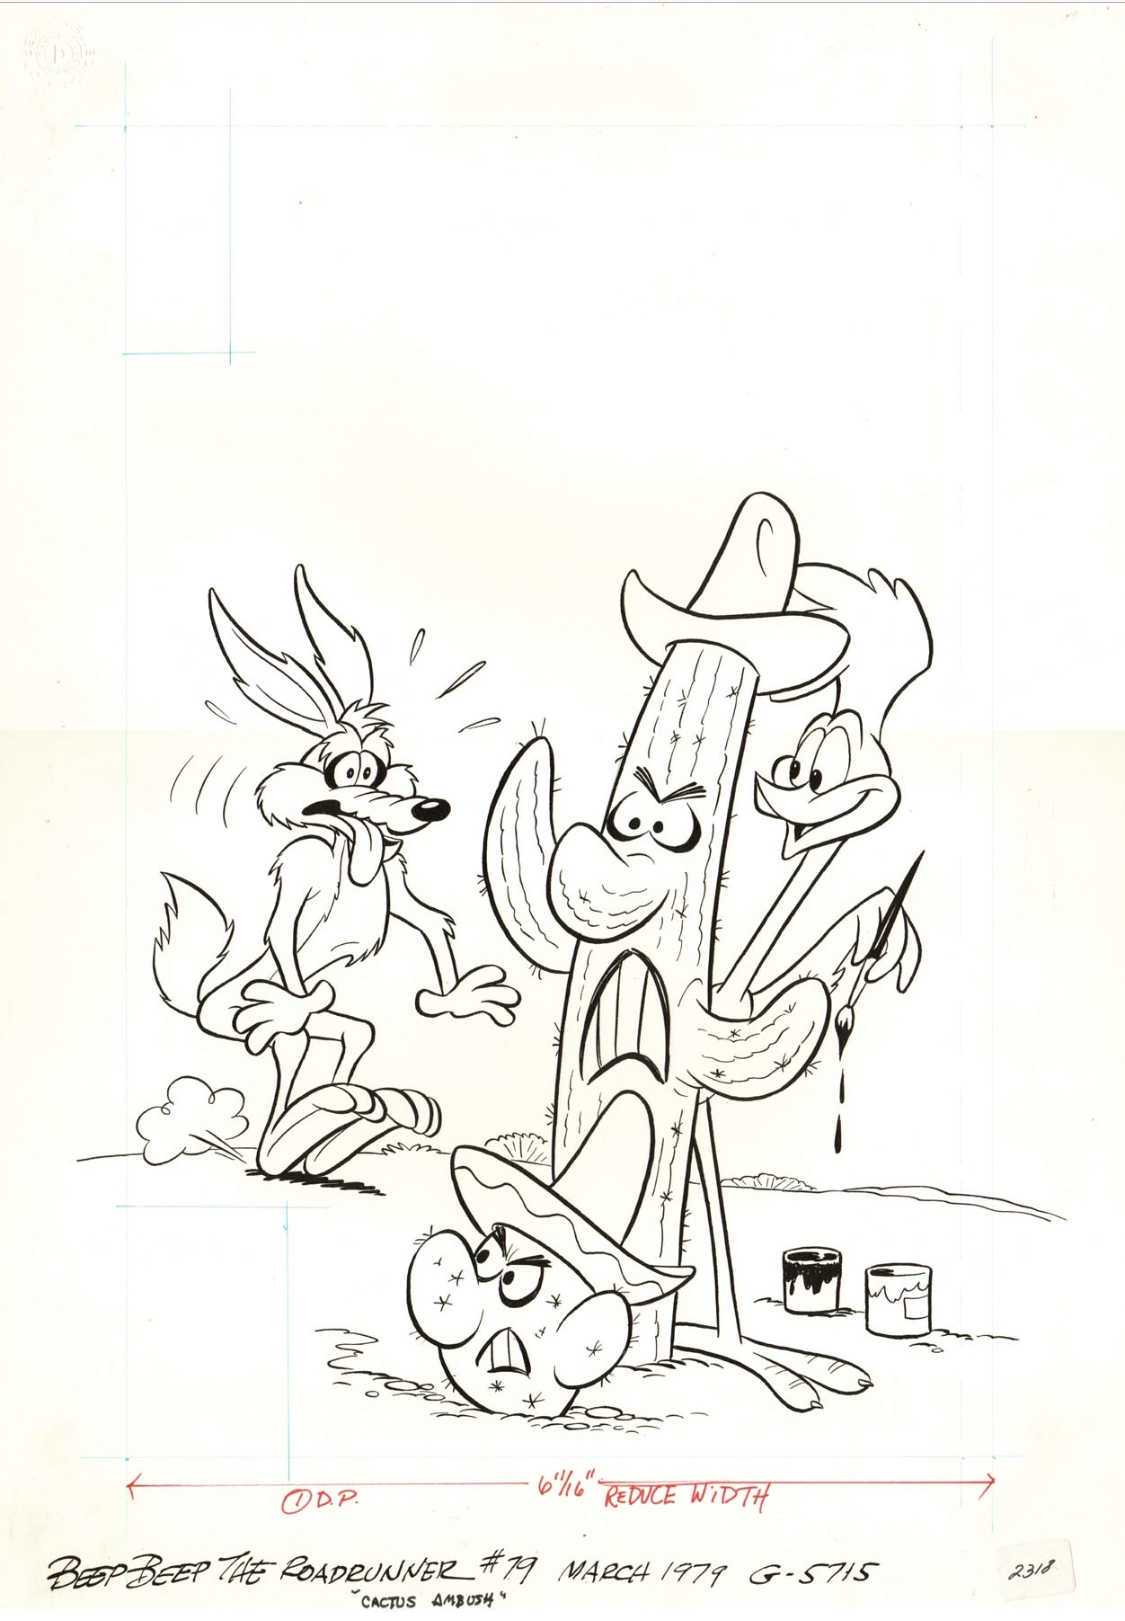 Looney Tunes MODEL SHEET PRINT B featuring ROAD RUNNER